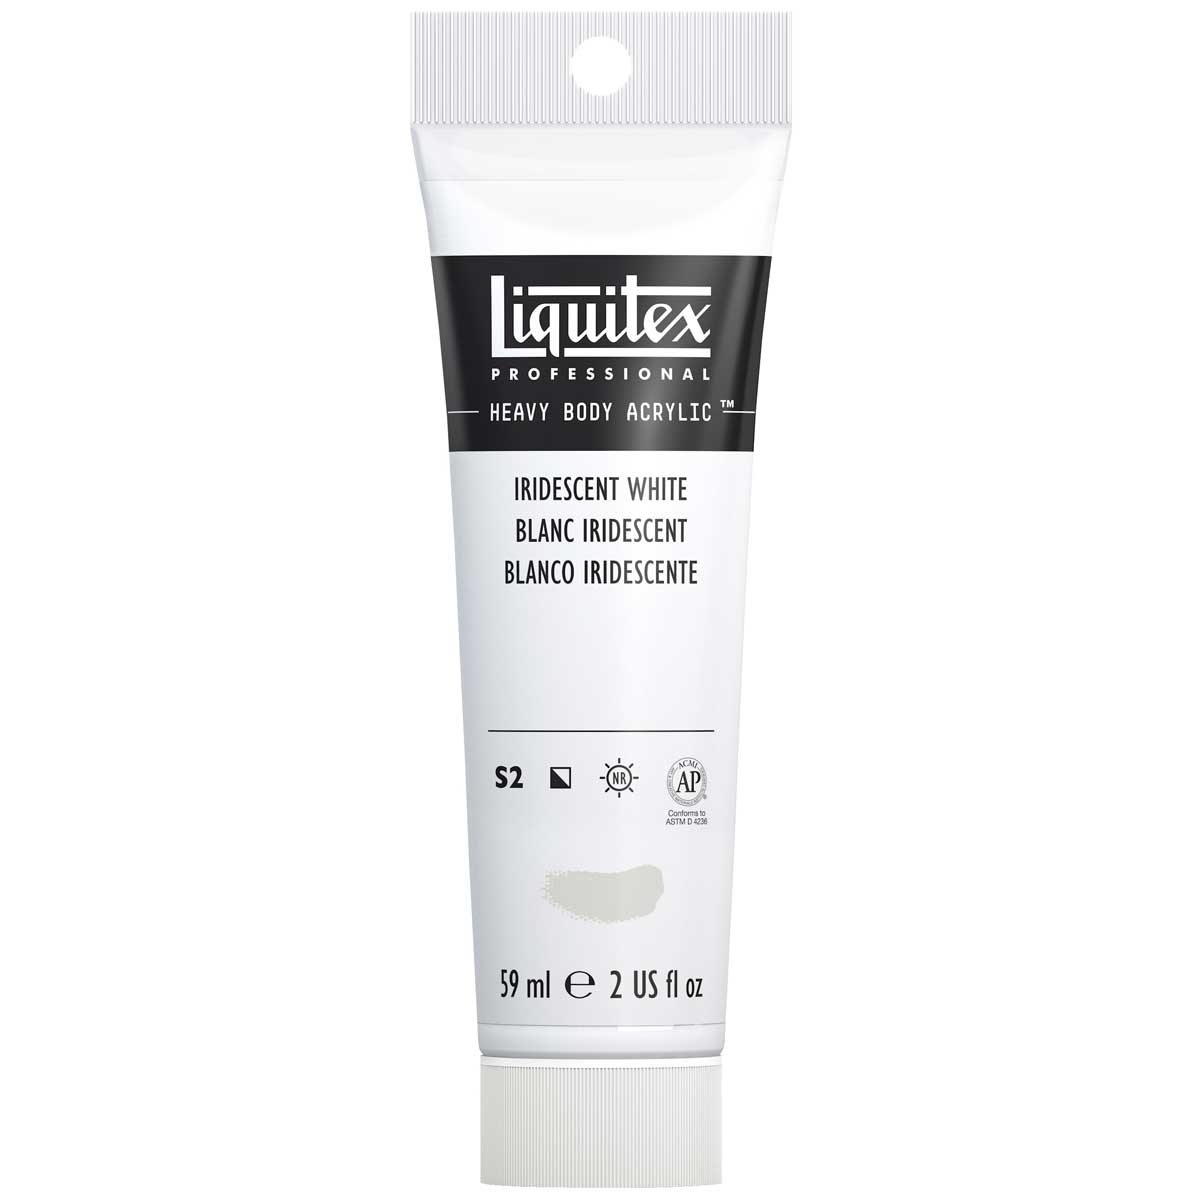 Liquitex Heavy Body Acrylic - Iridescent White 59ml/2oz